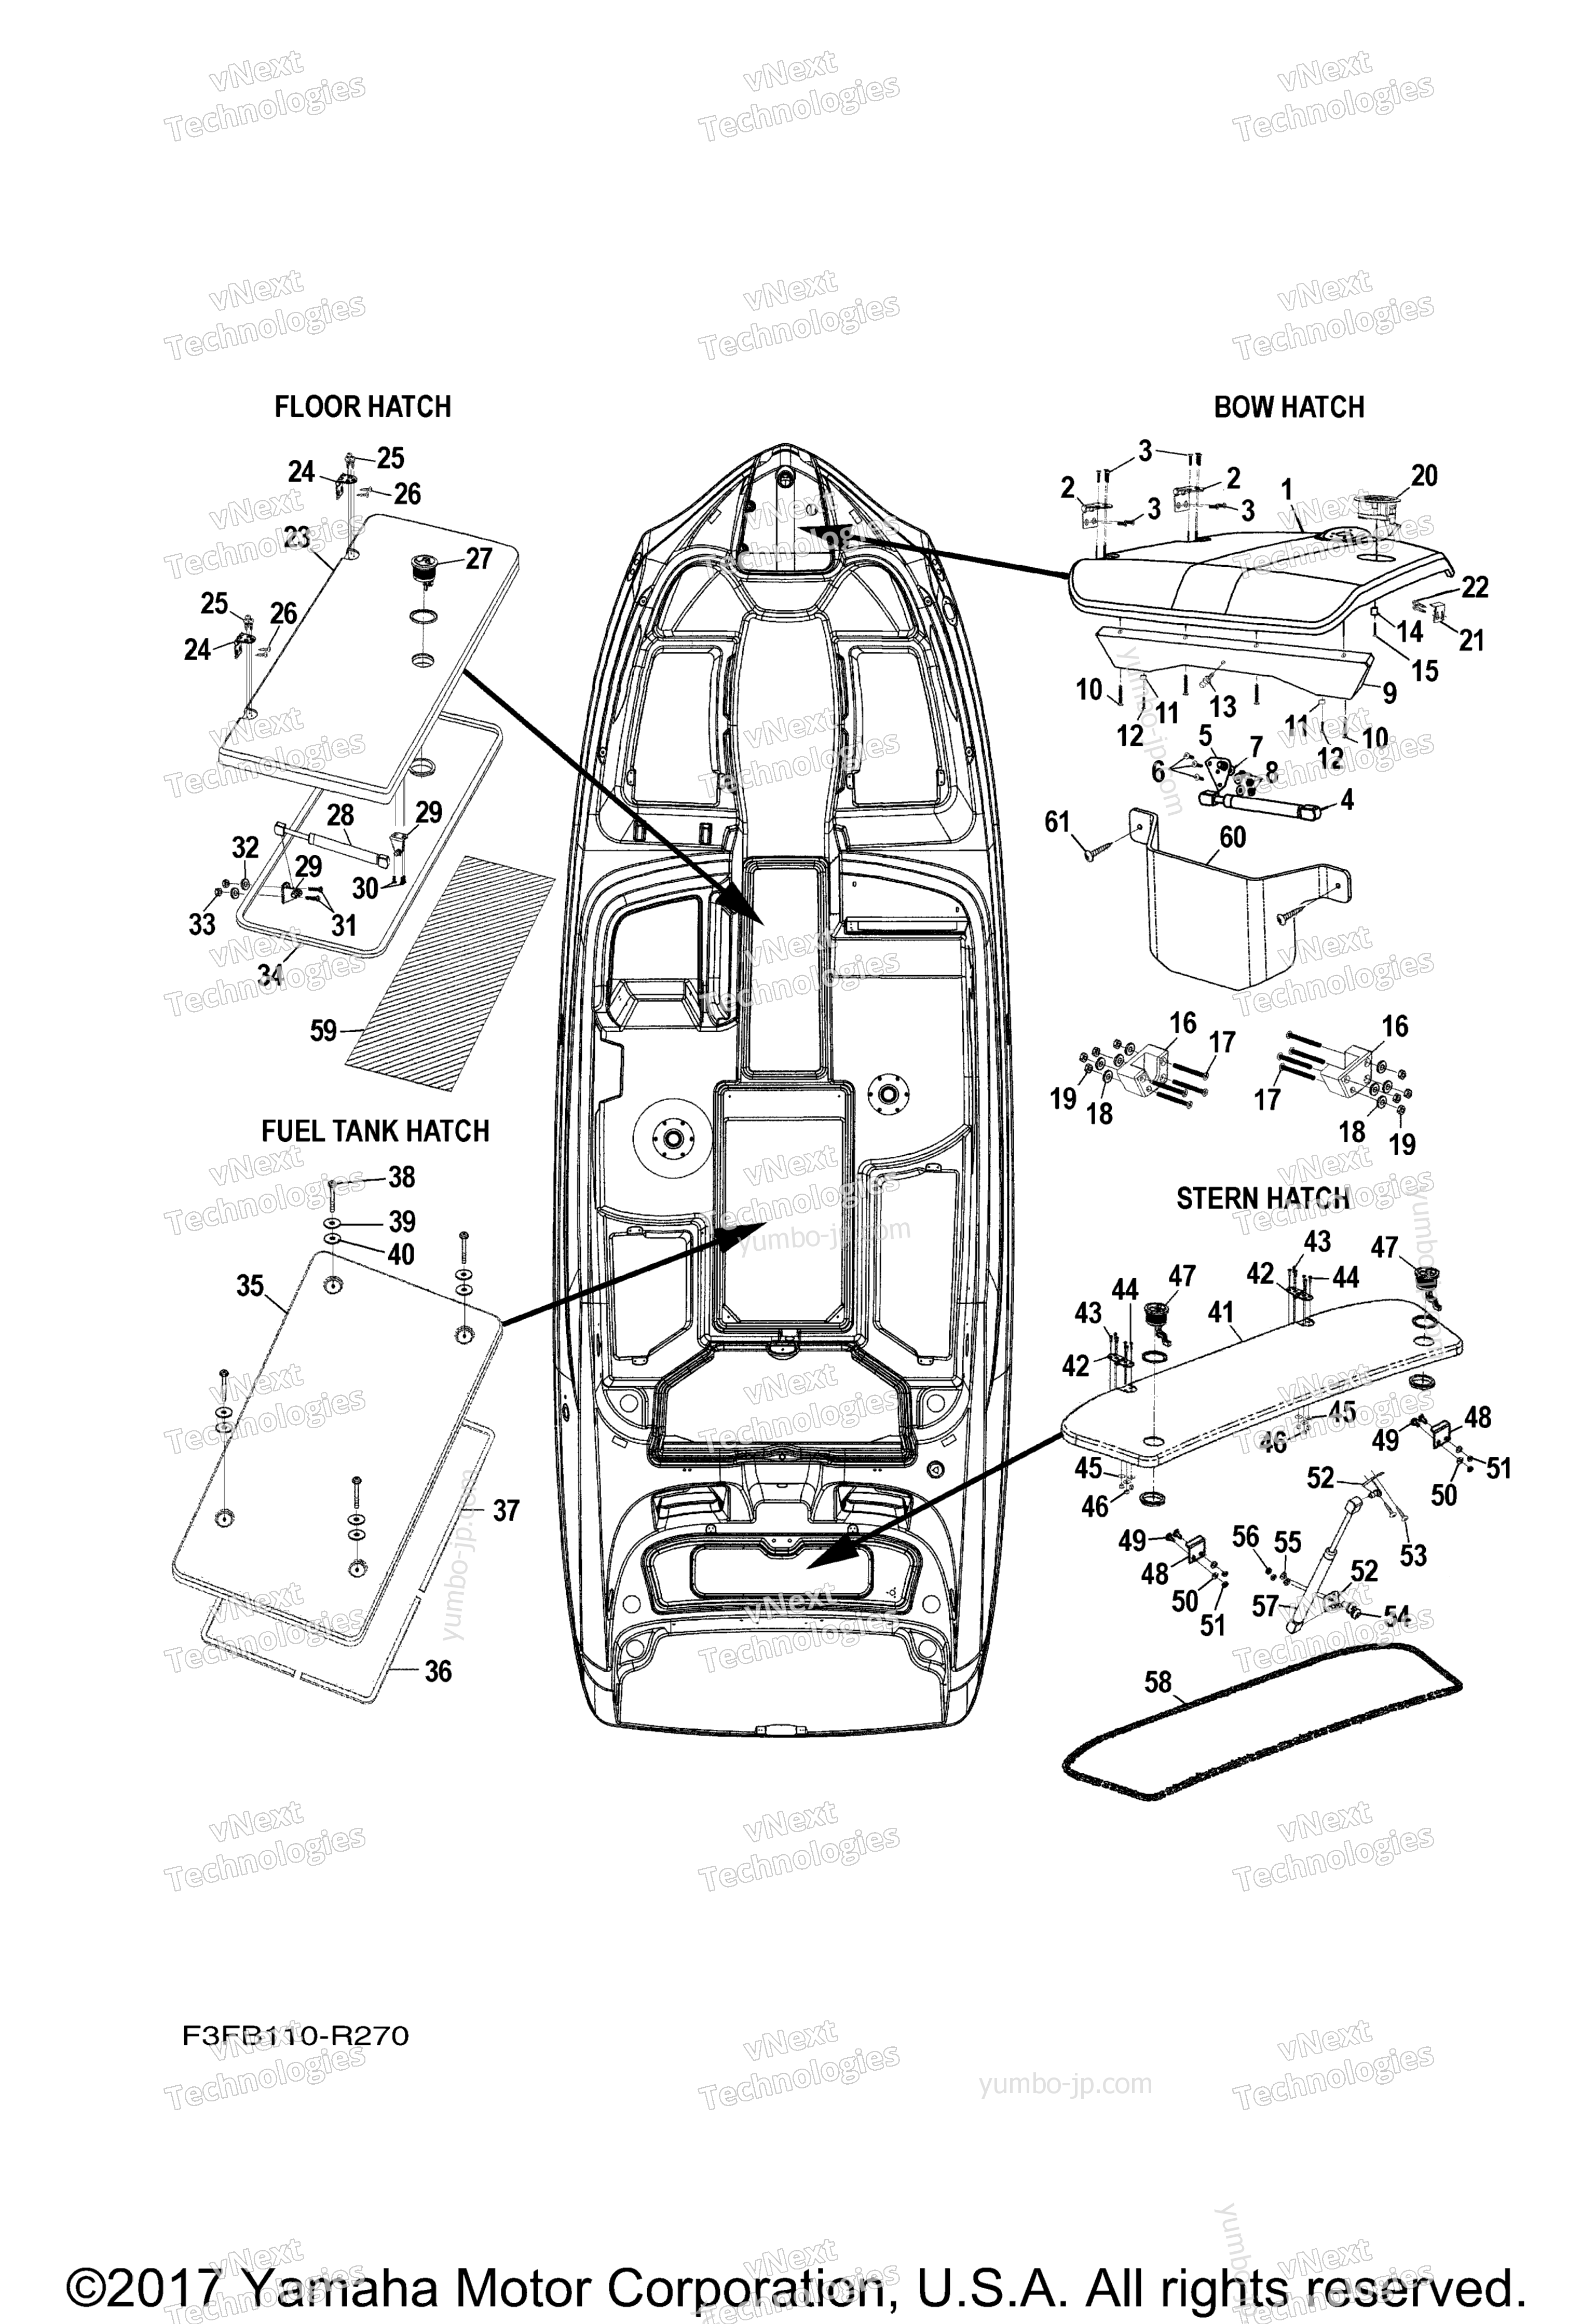 Deck Hatch 1 for boats YAMAHA 242X E SERIES CALIFORNIA (SAT1800ELR) CA 2016 year